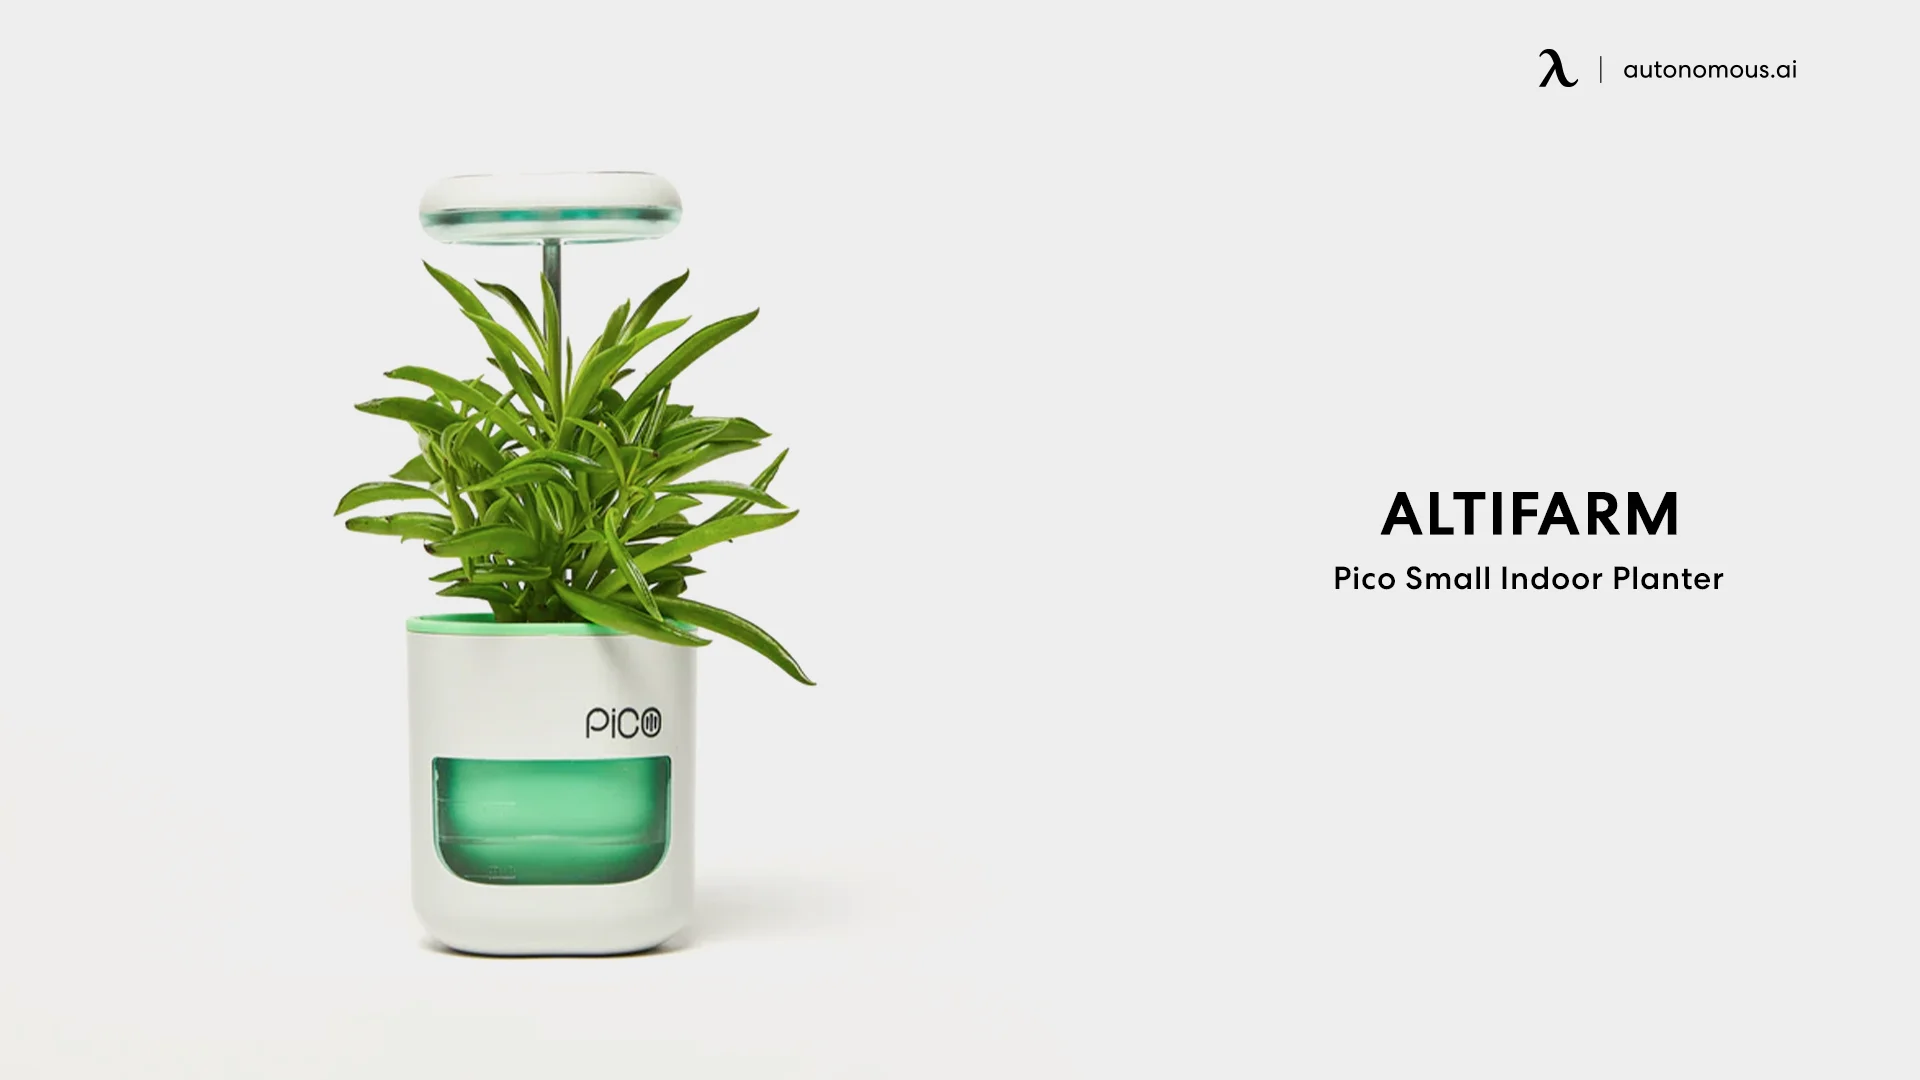 Altifarm Pico Small Indoor Planter